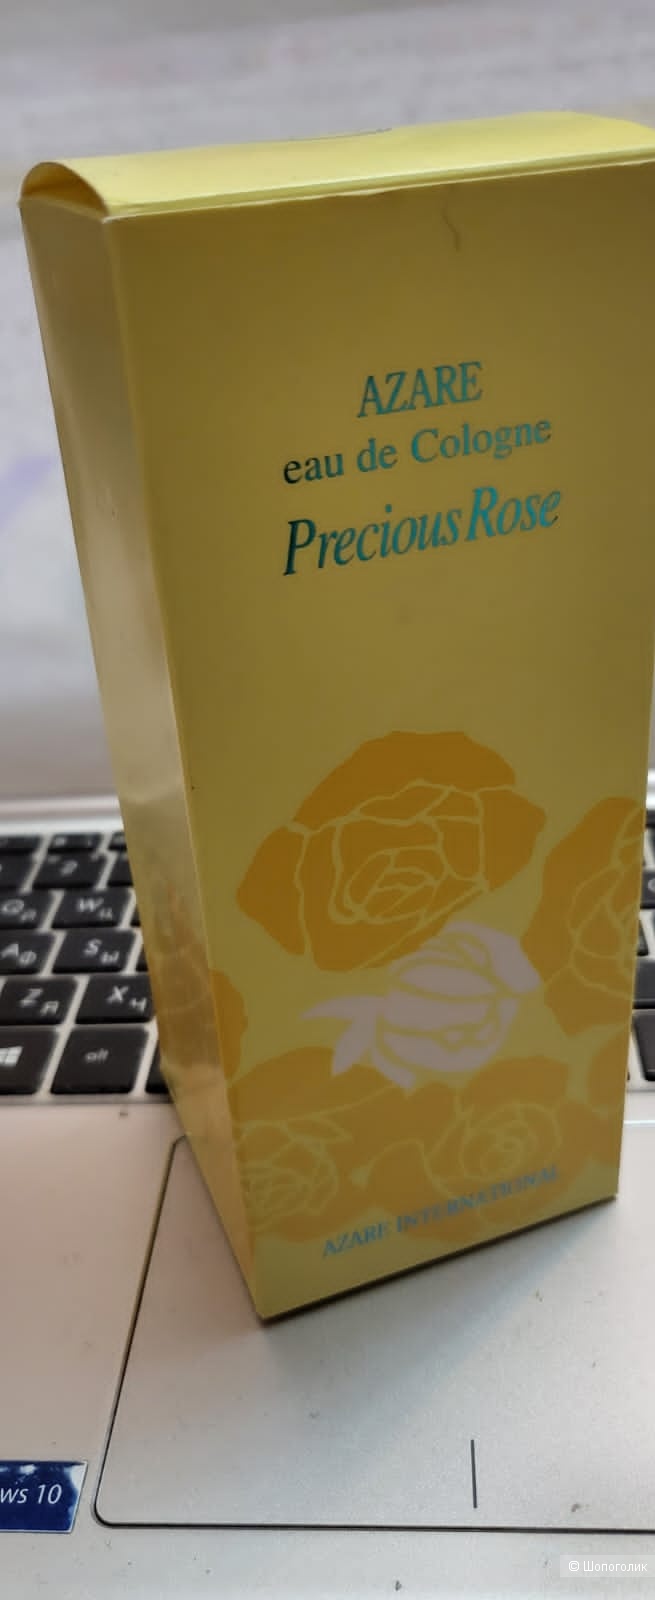 Одеколон Precious Rose от Azare, 120 мл